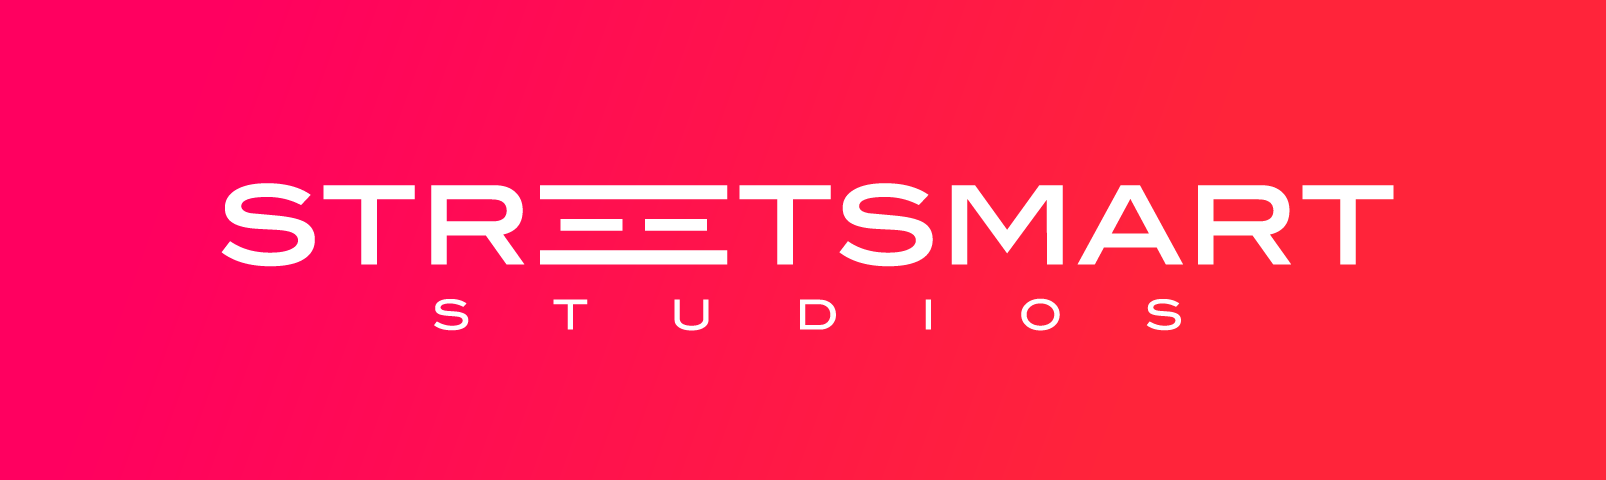 Streetsmart Studios